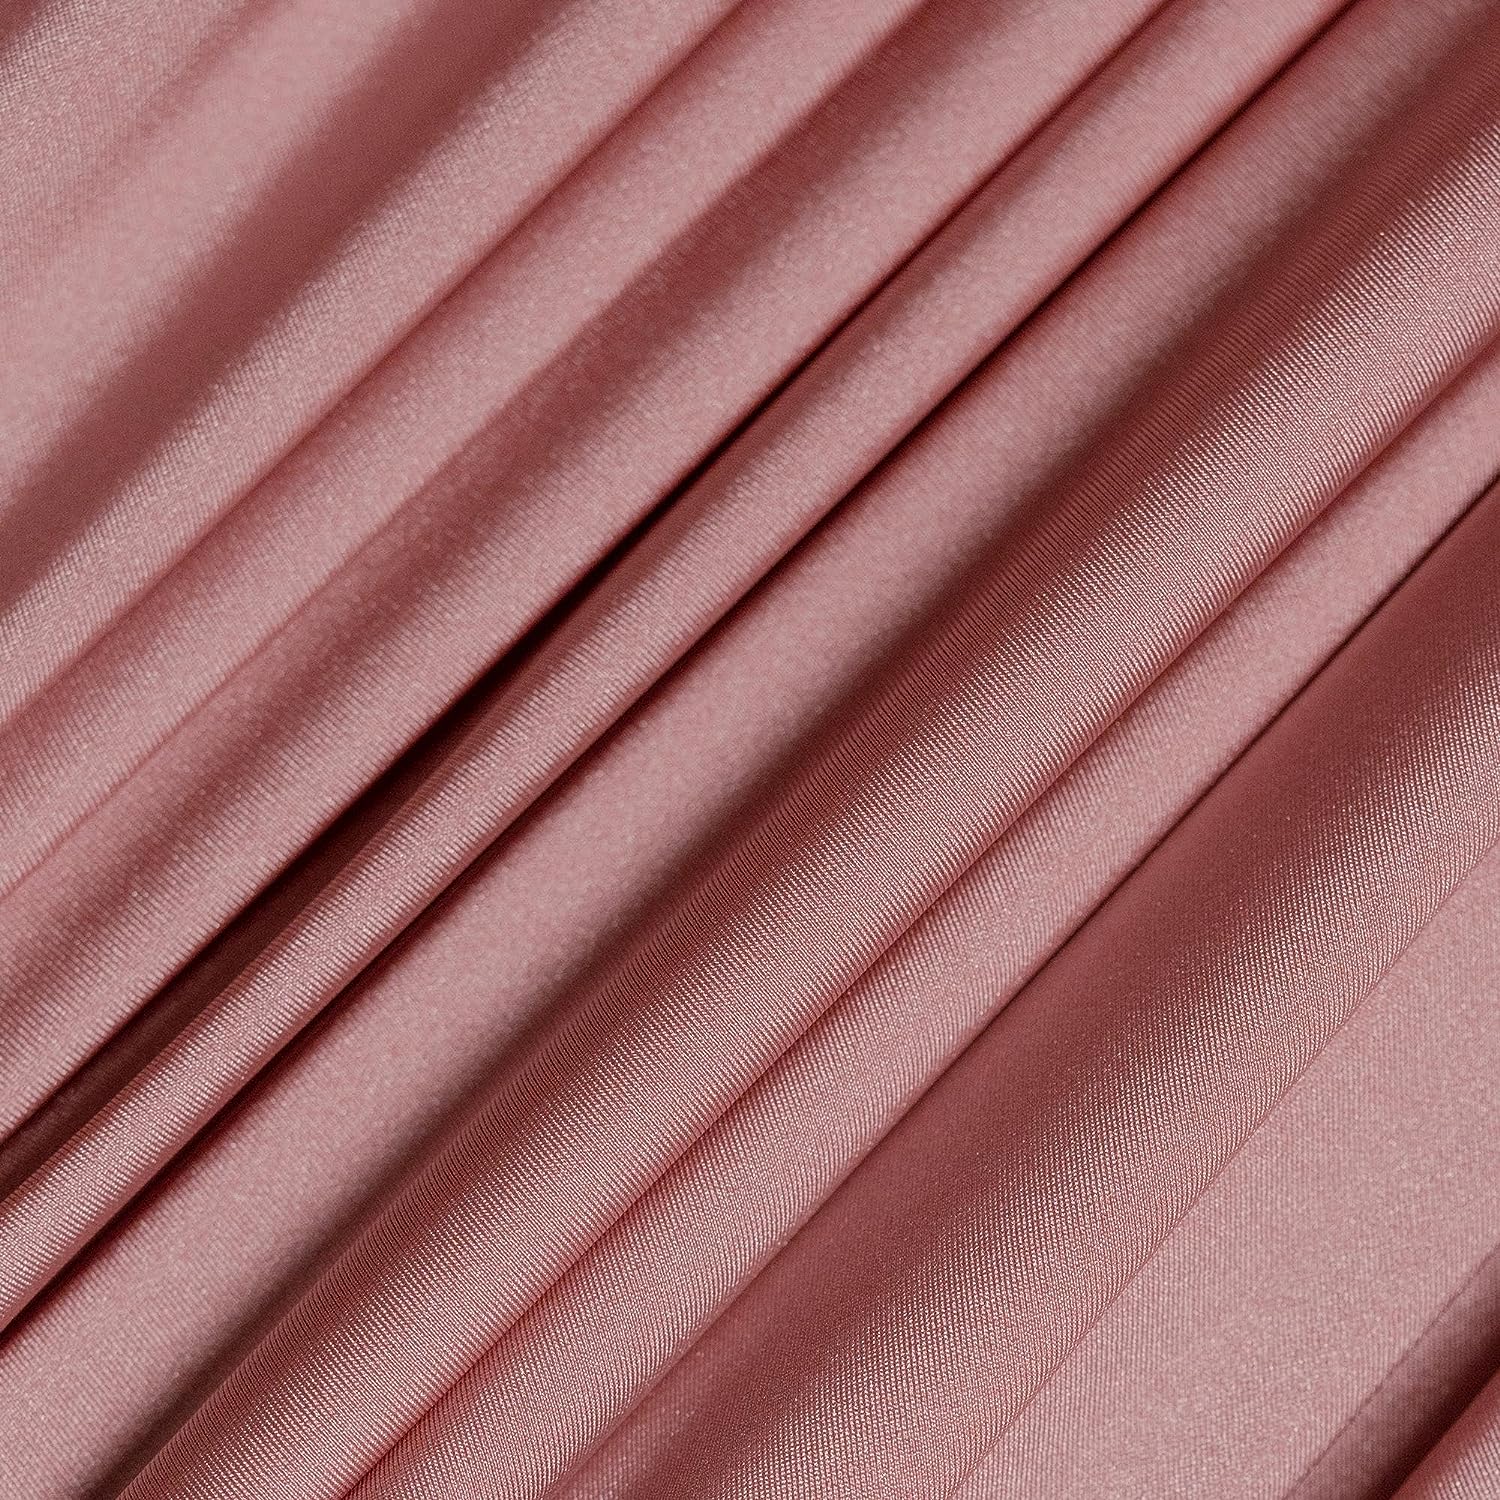 Dusty Rose Luxury Nylon Spandex Fabric By The YardICE FABRICSICE FABRICSBy The Yard (60" Width)Dusty Rose Luxury Nylon Spandex Fabric By The Yard ICE FABRICS